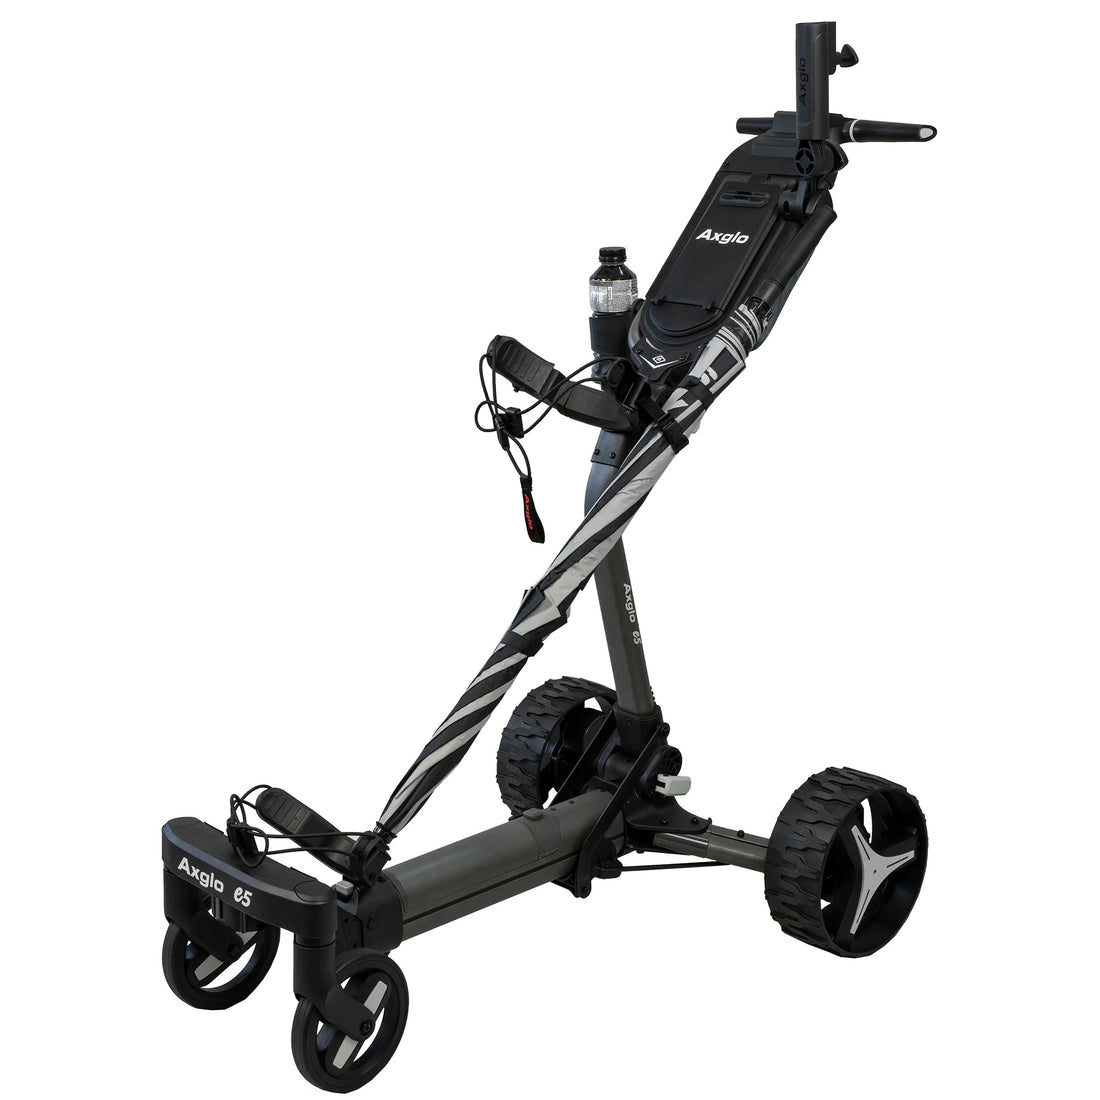 Electric Golf Push Cart Features - Big Horn Golfer